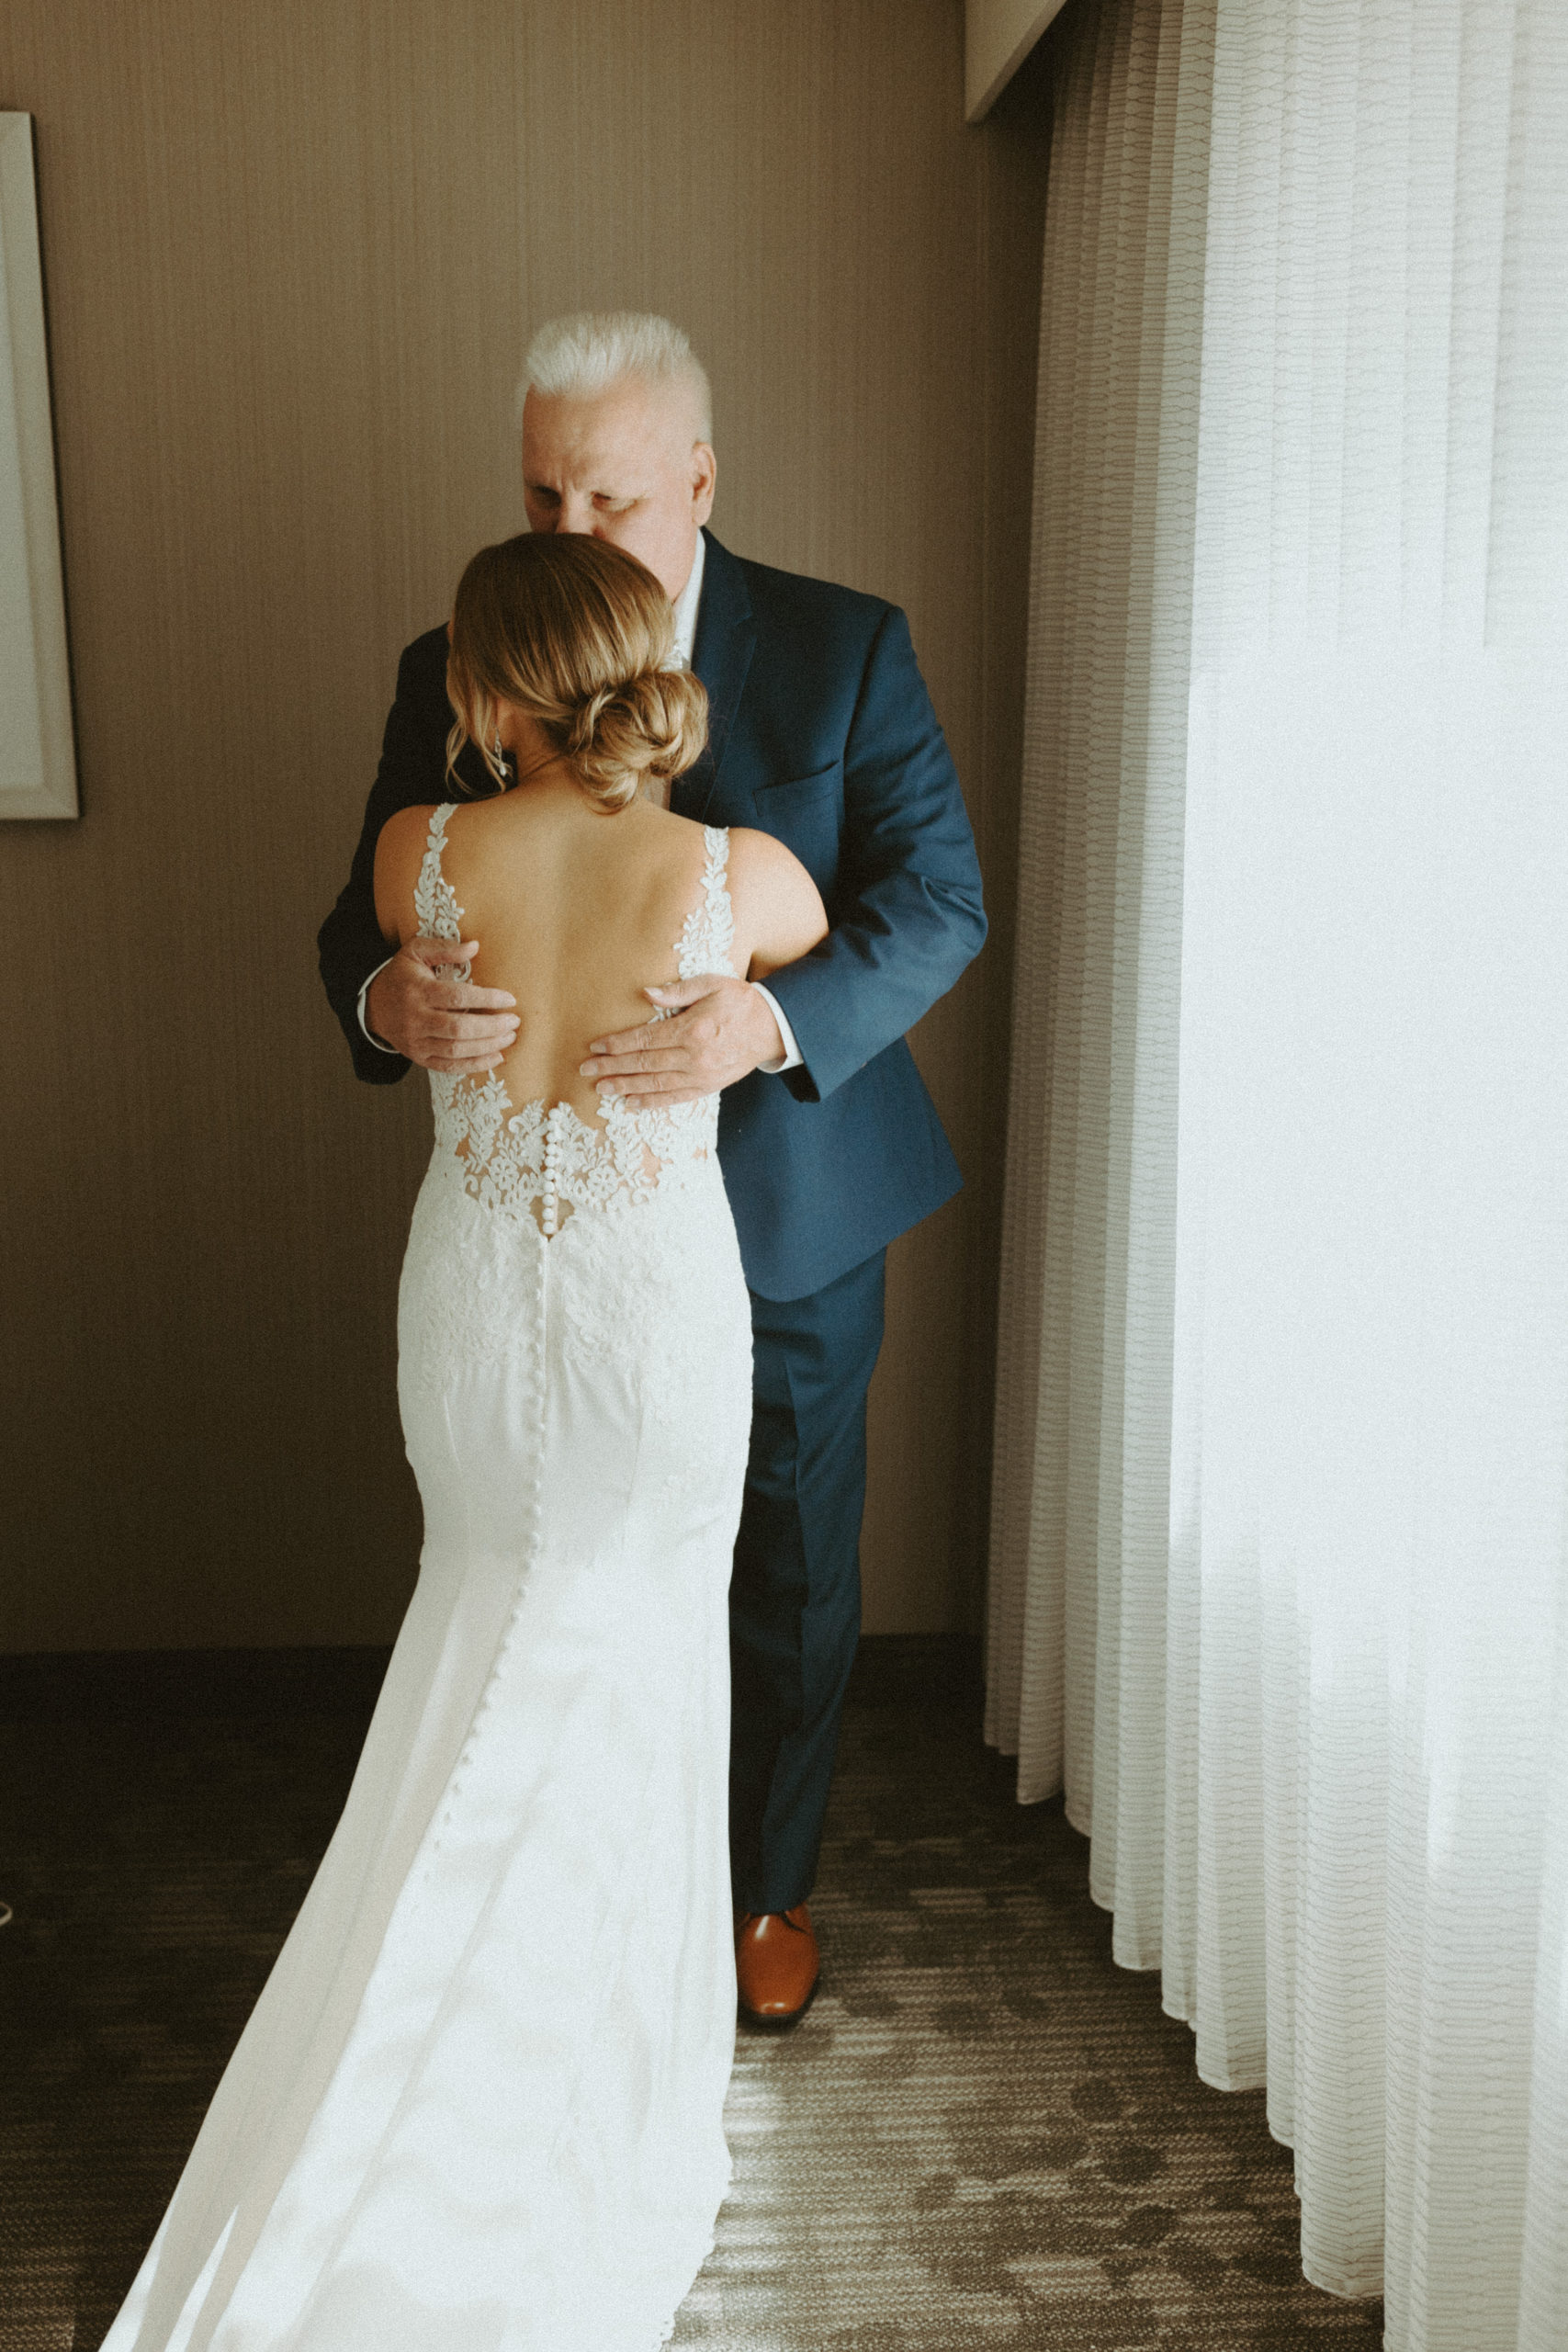 the bride hugging her dad